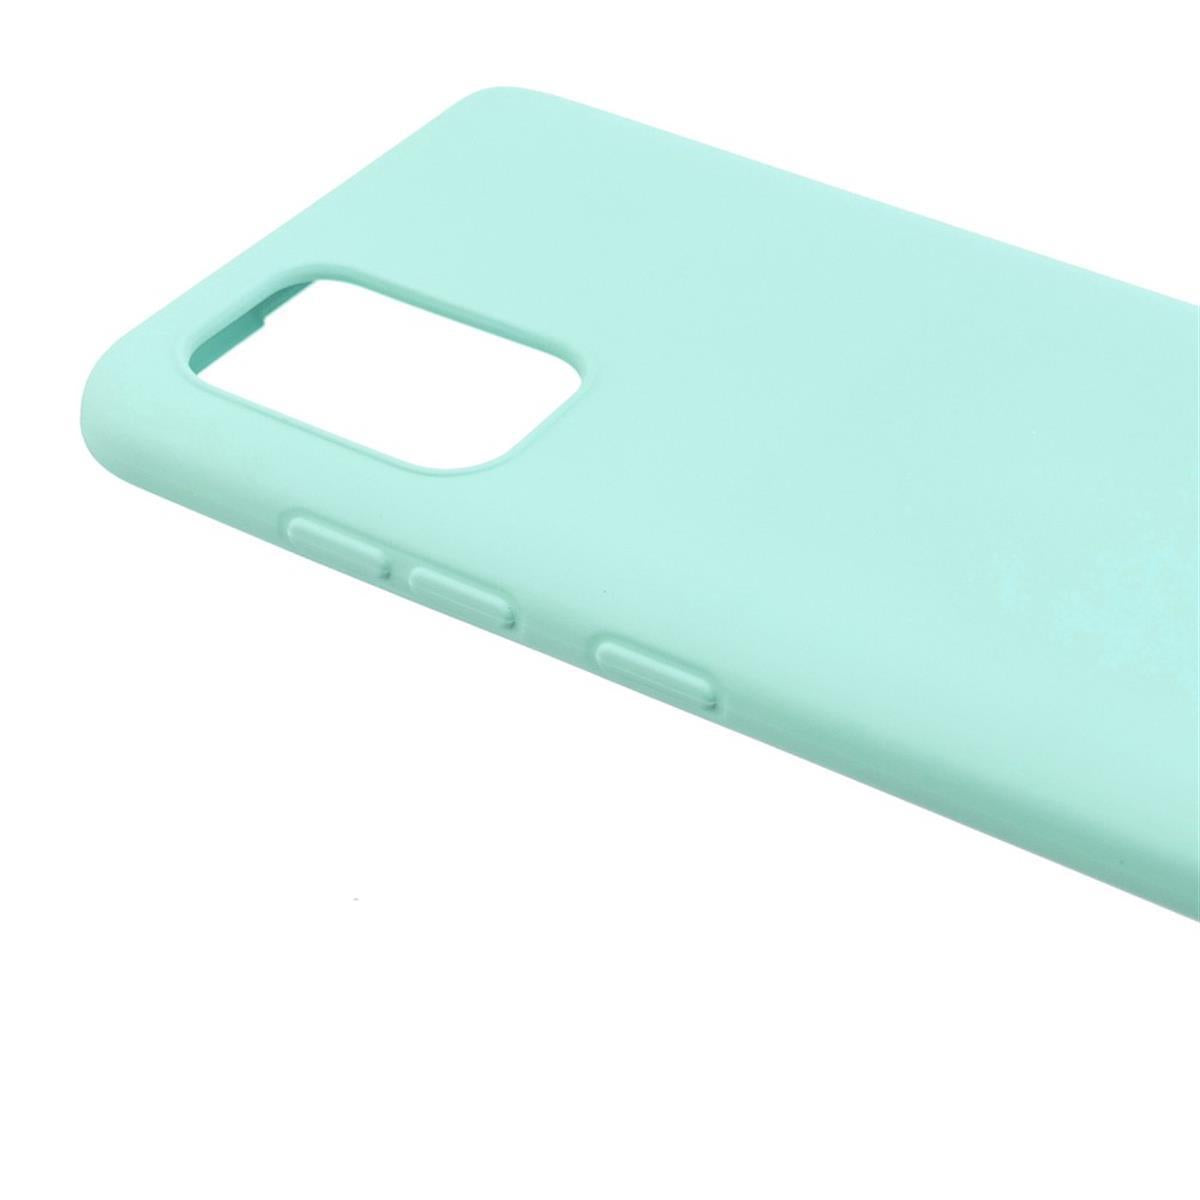 Hülle für Samsung Galaxy A52/A52 5G/A52s 5G Handy Silikon Case Cover Matt Grün